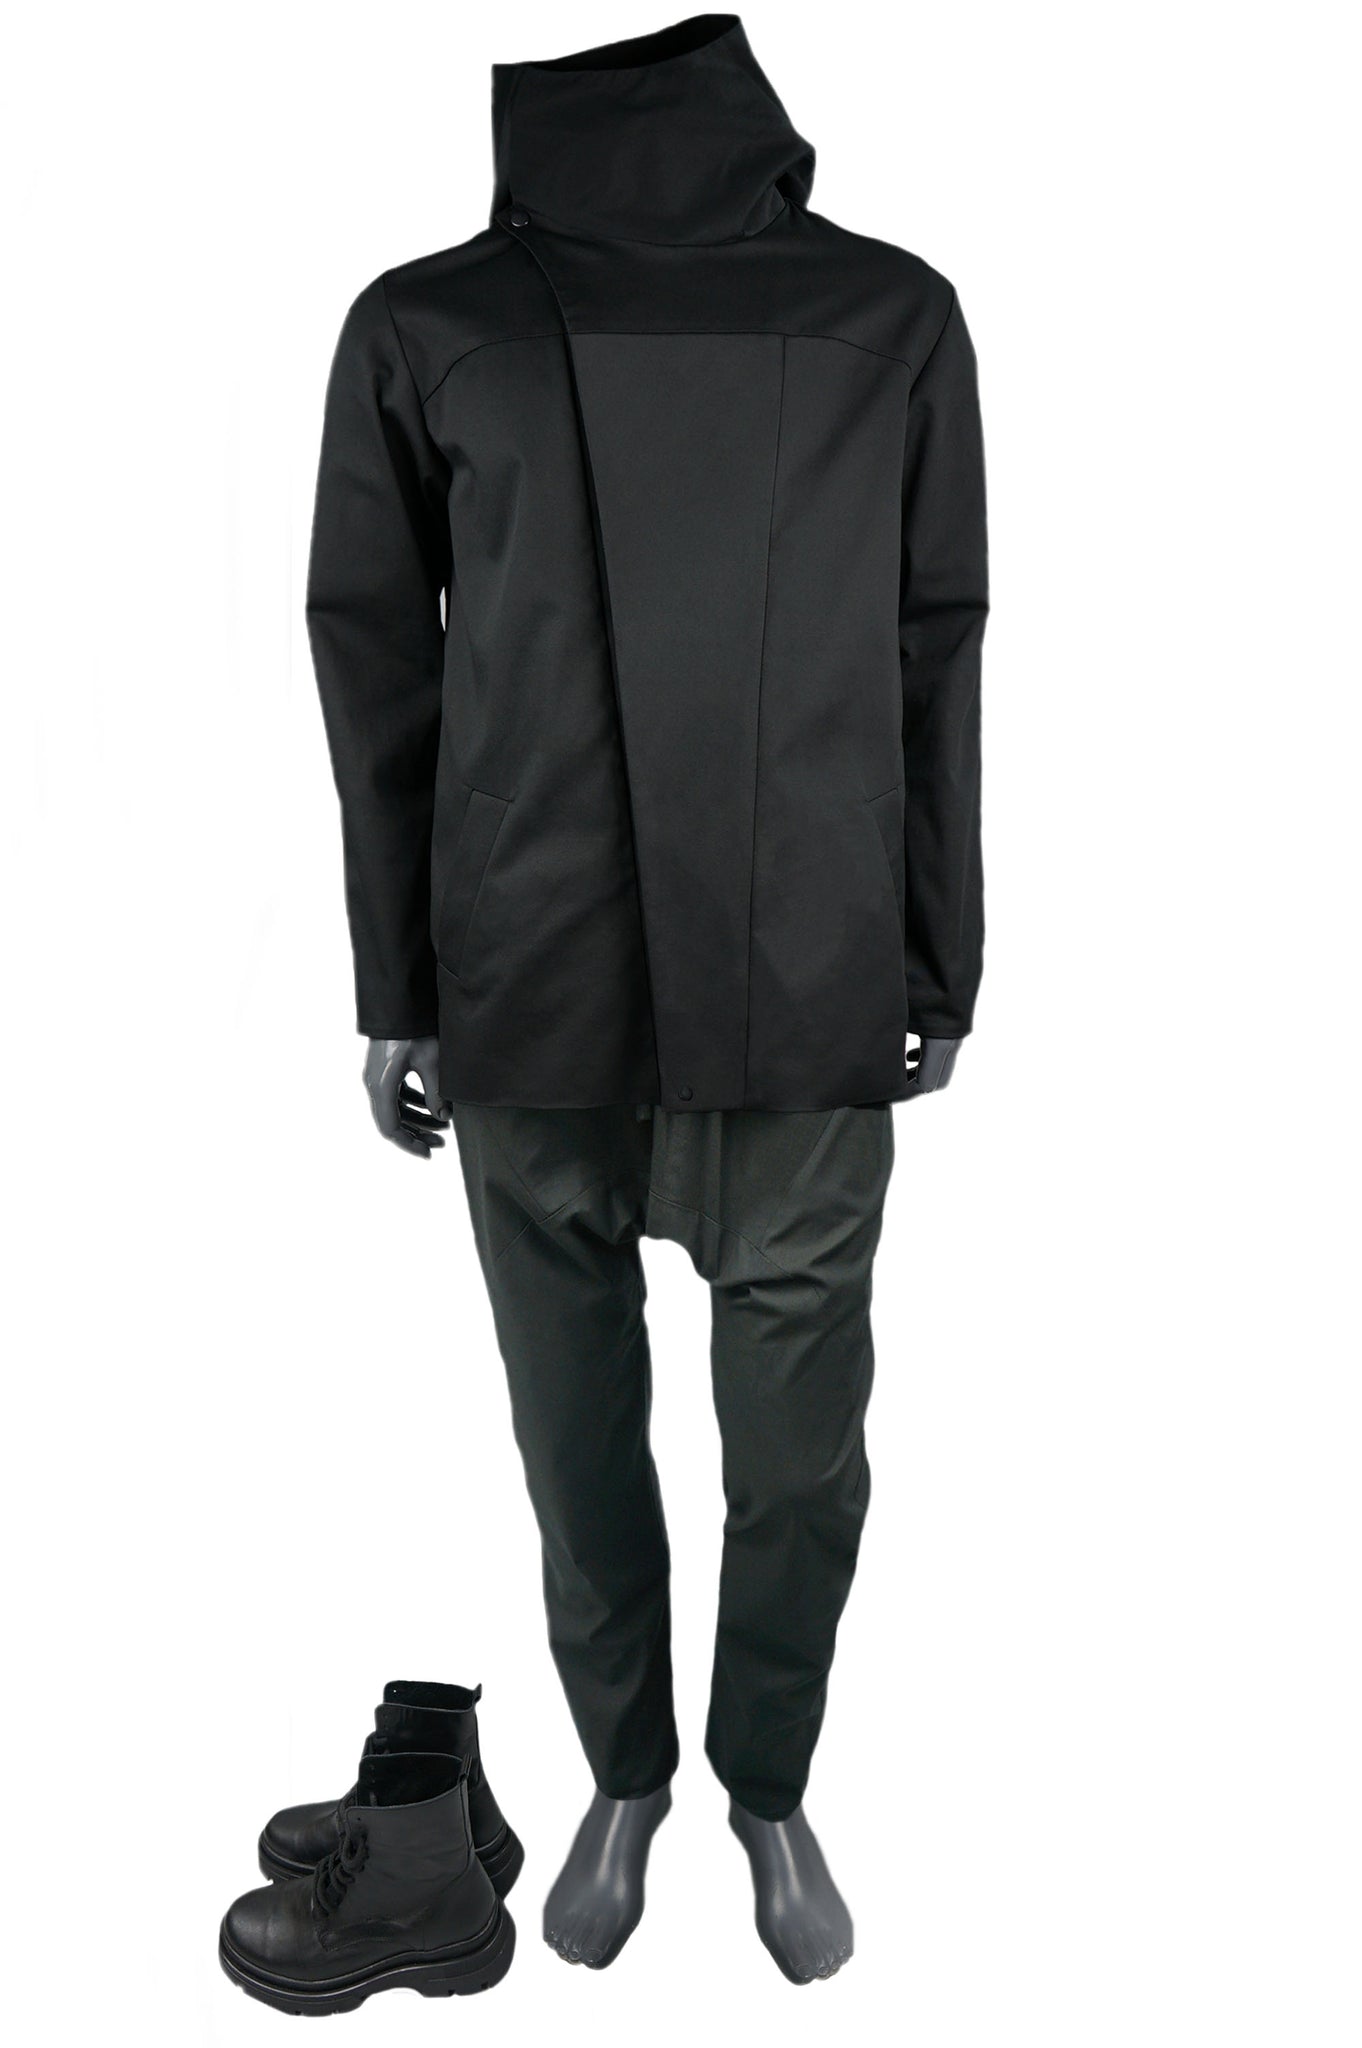 adddress MG17 Asymmetrical Long Jacket